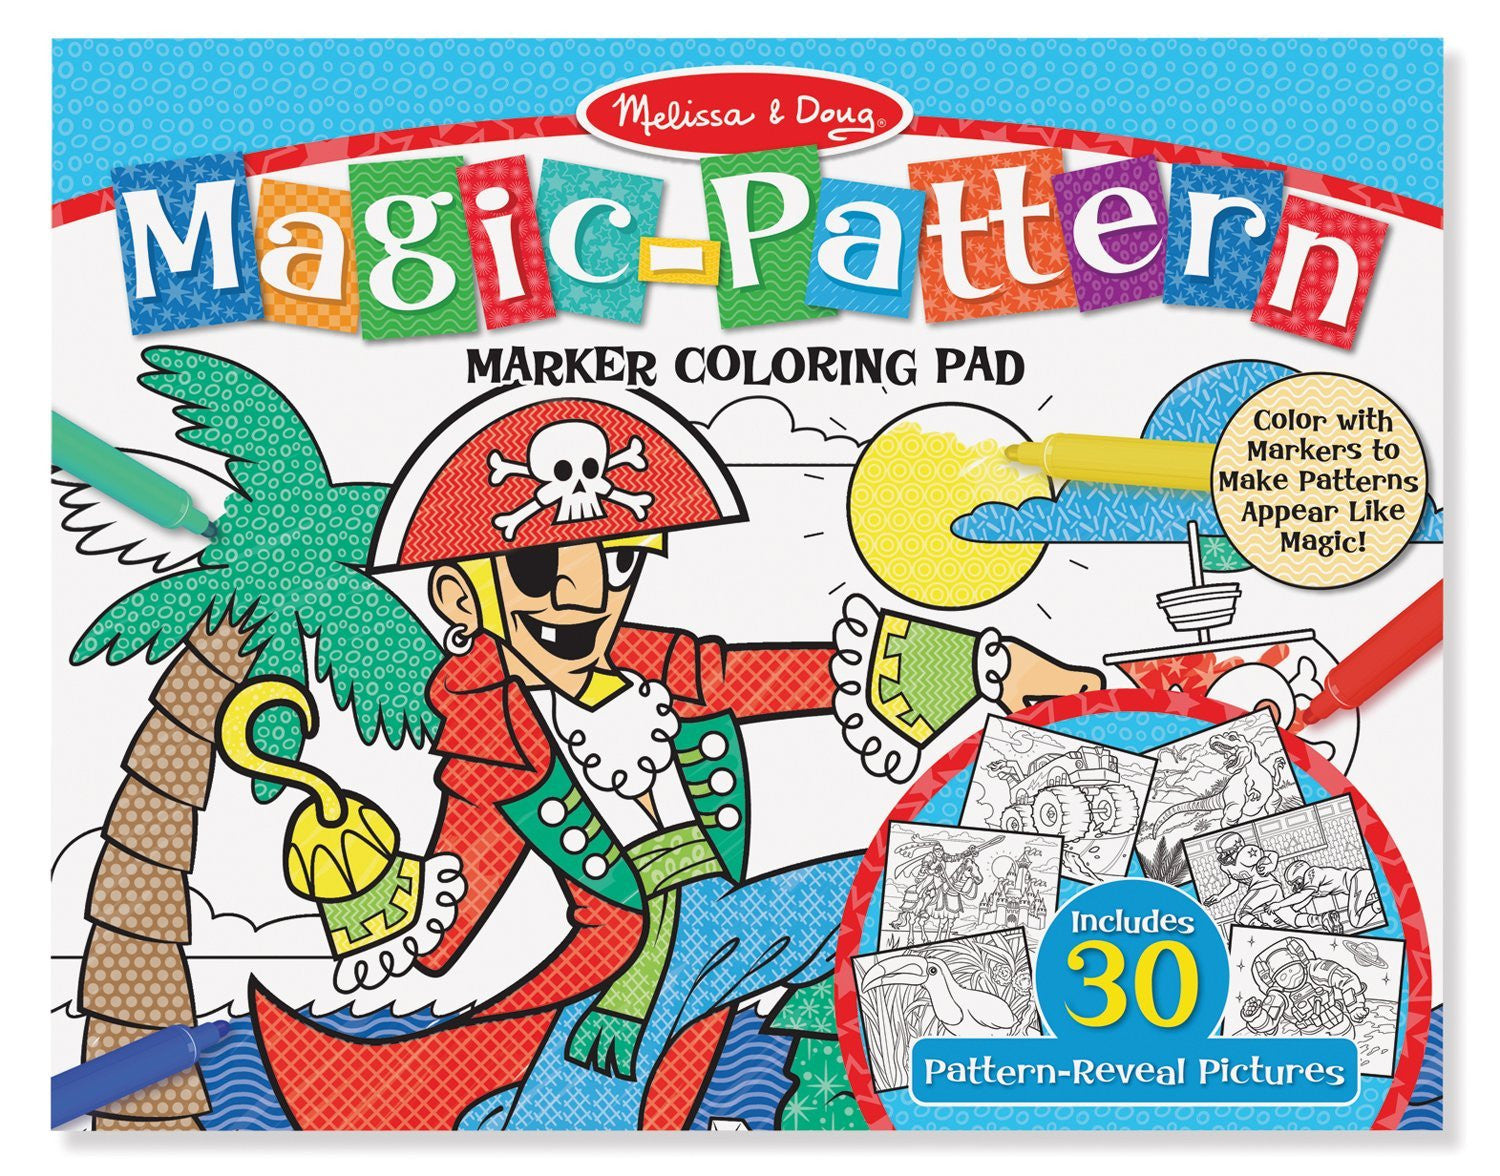 Melissa & Doug MagicPattern Marker Coloring Pad - Blue